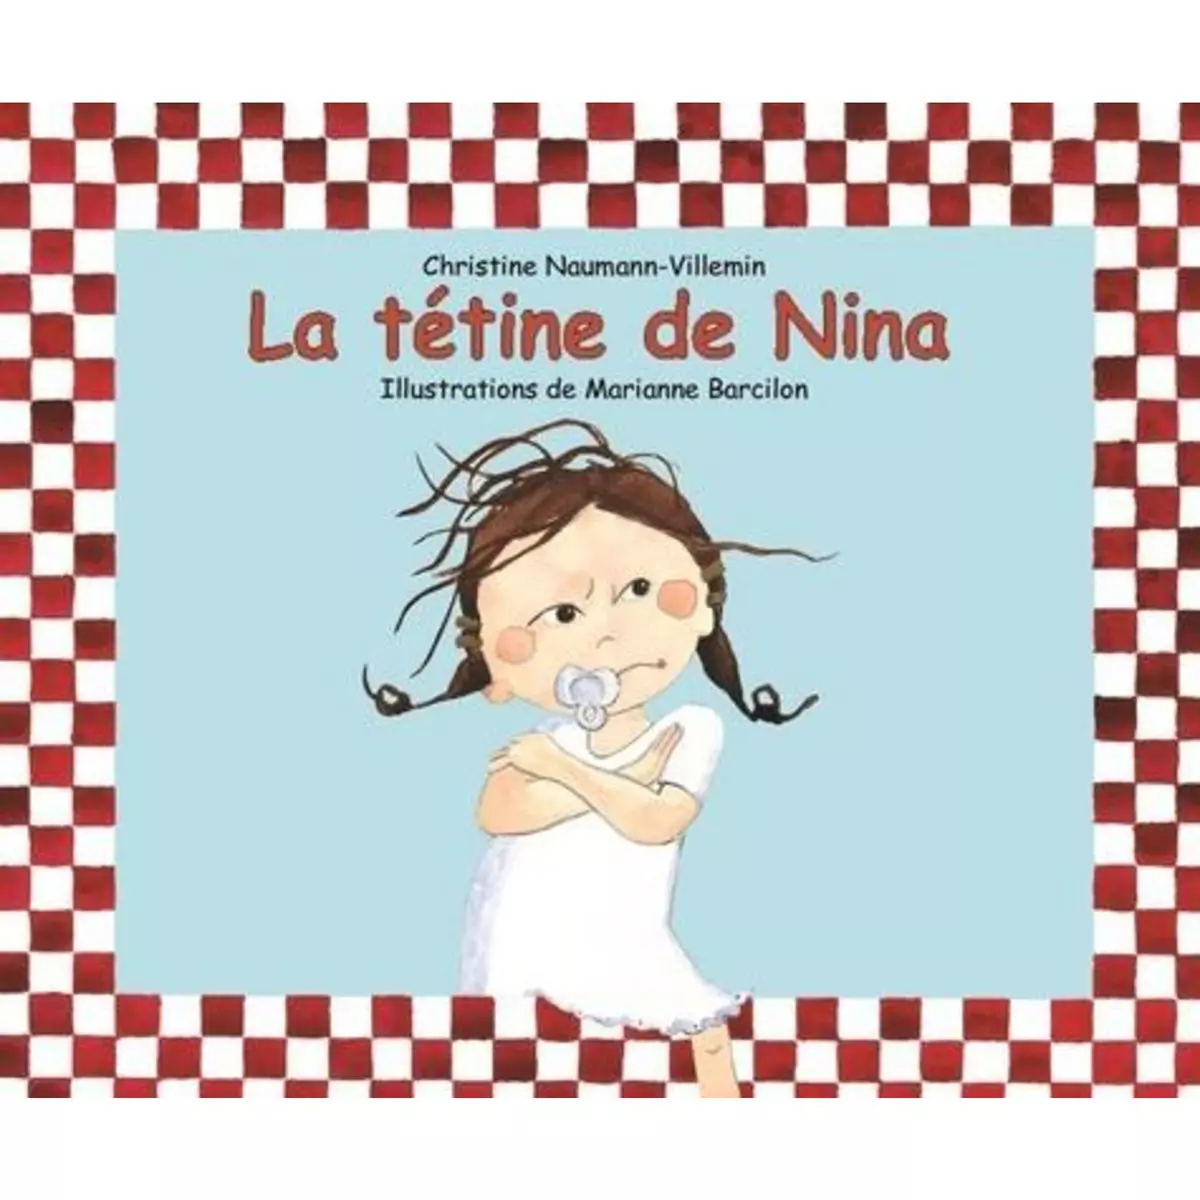  NINA : LA TETINE DE NINA, Naumann-Villemin Christine